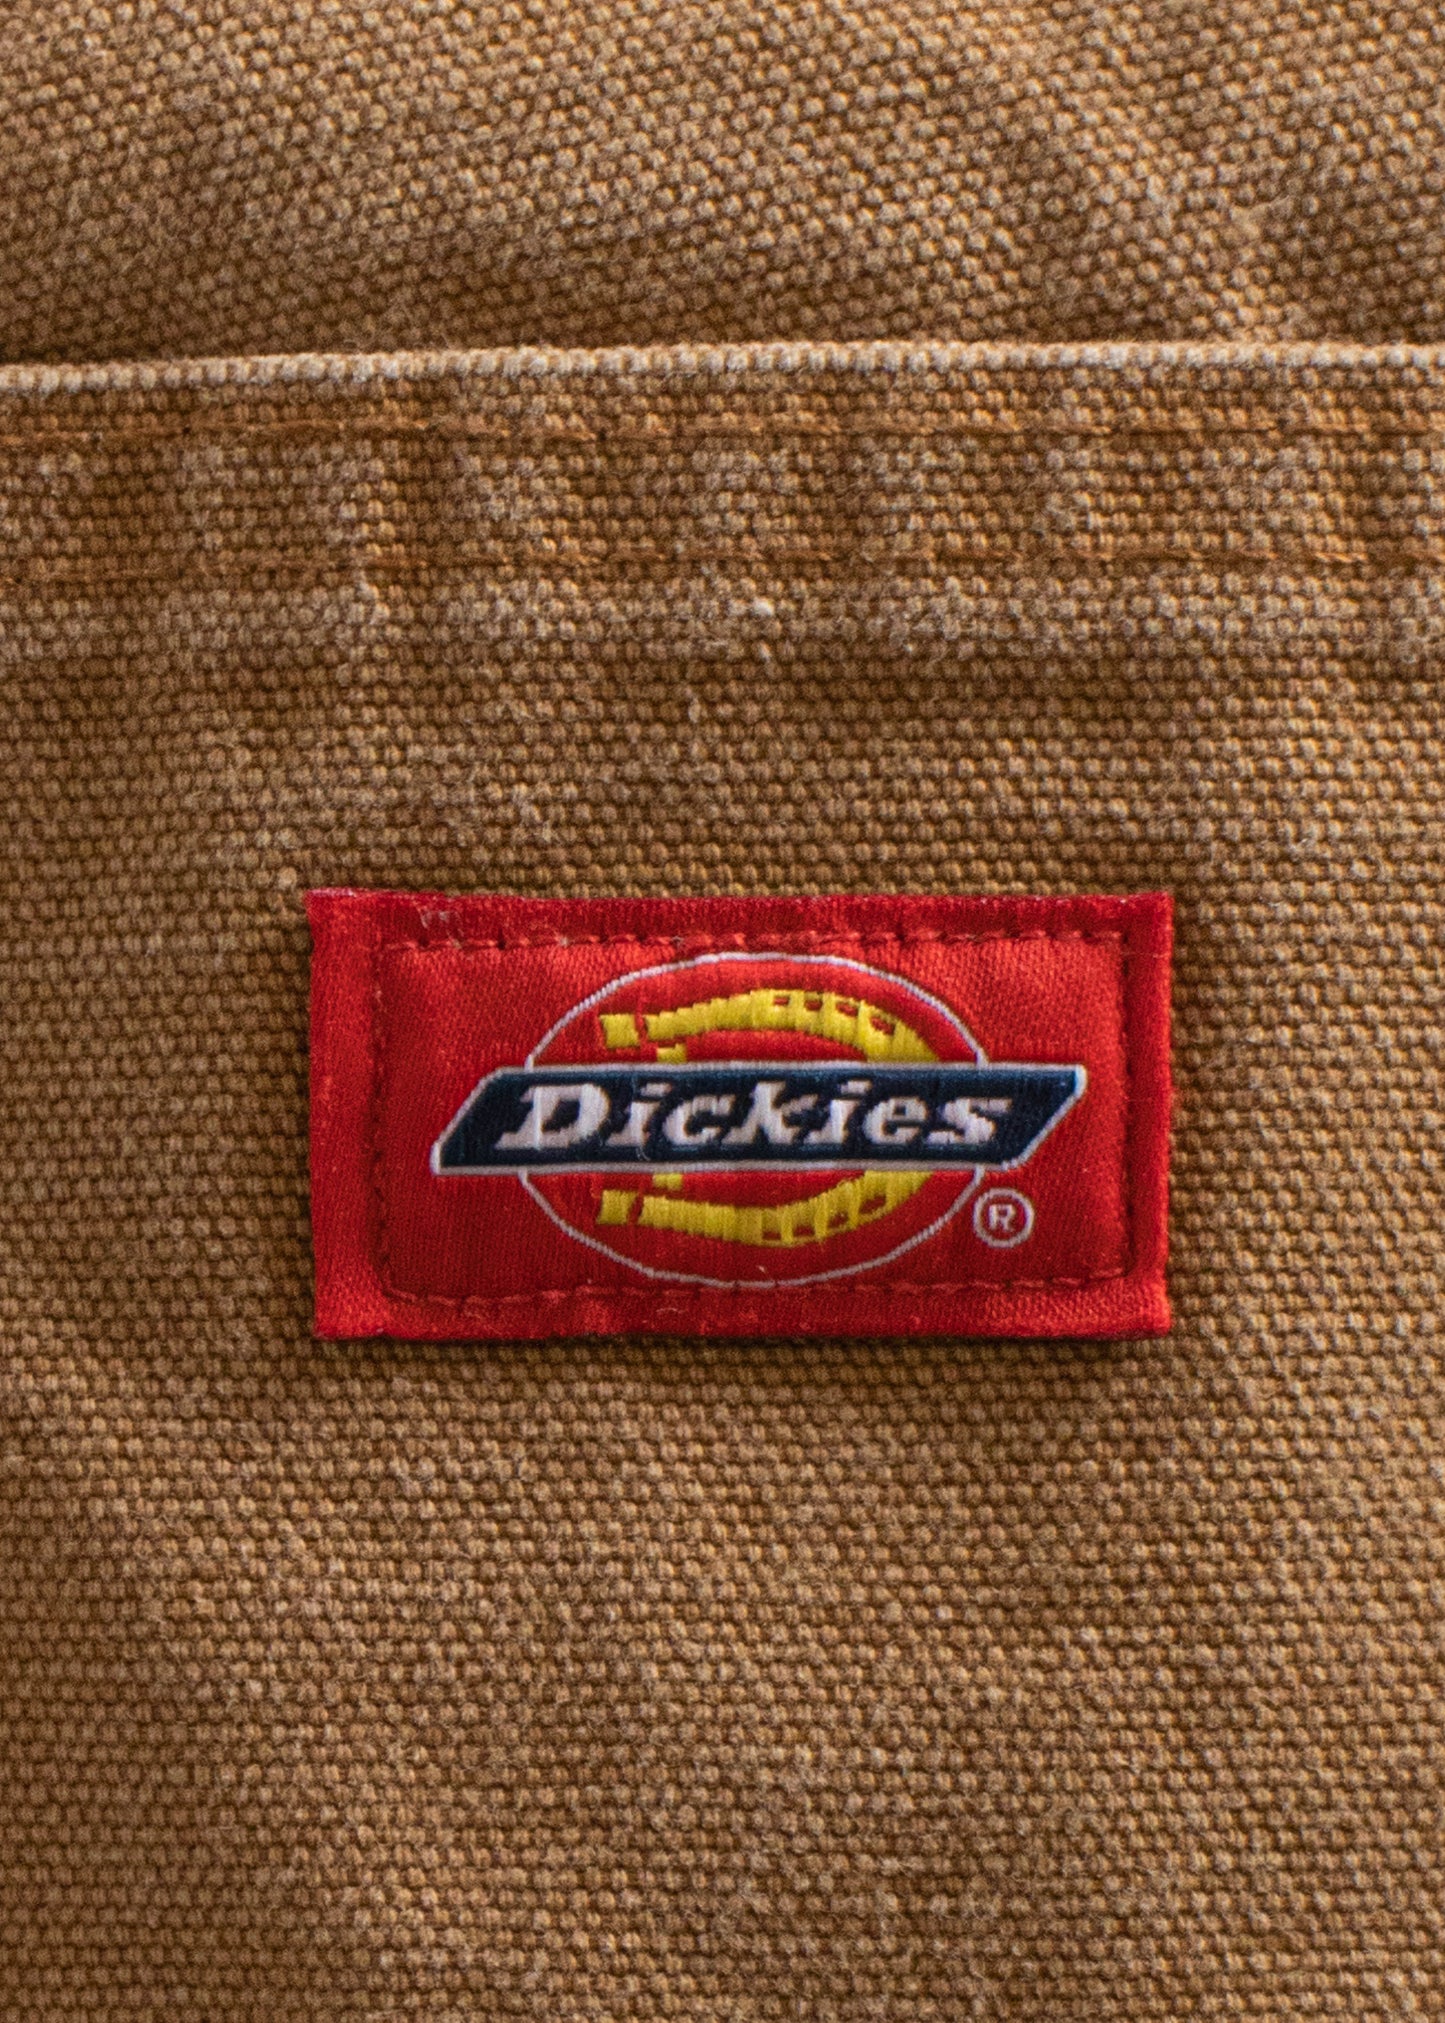 Dickies Carpenter Pants Size Women's 33 Men's 36